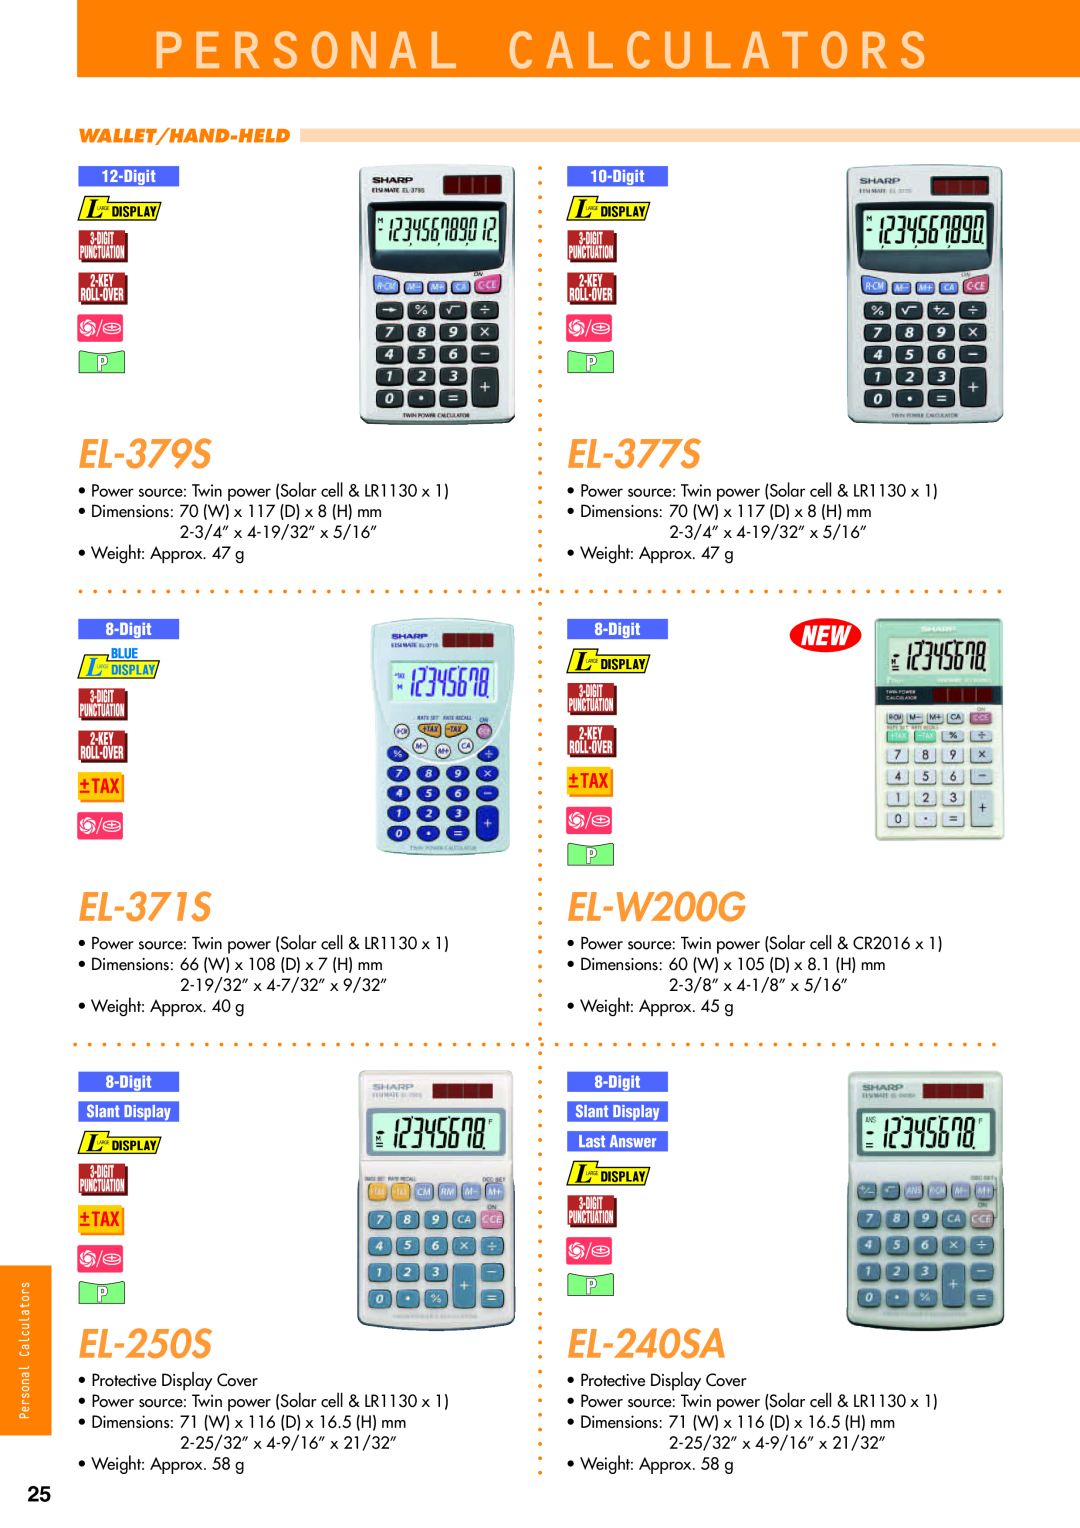 Sharp electronic calculator EL-379S, EL-371S, EL-250S, EL-377S, EL-W200G, EL-240SA, Personal Calculators, Wallet/Hand-Held 